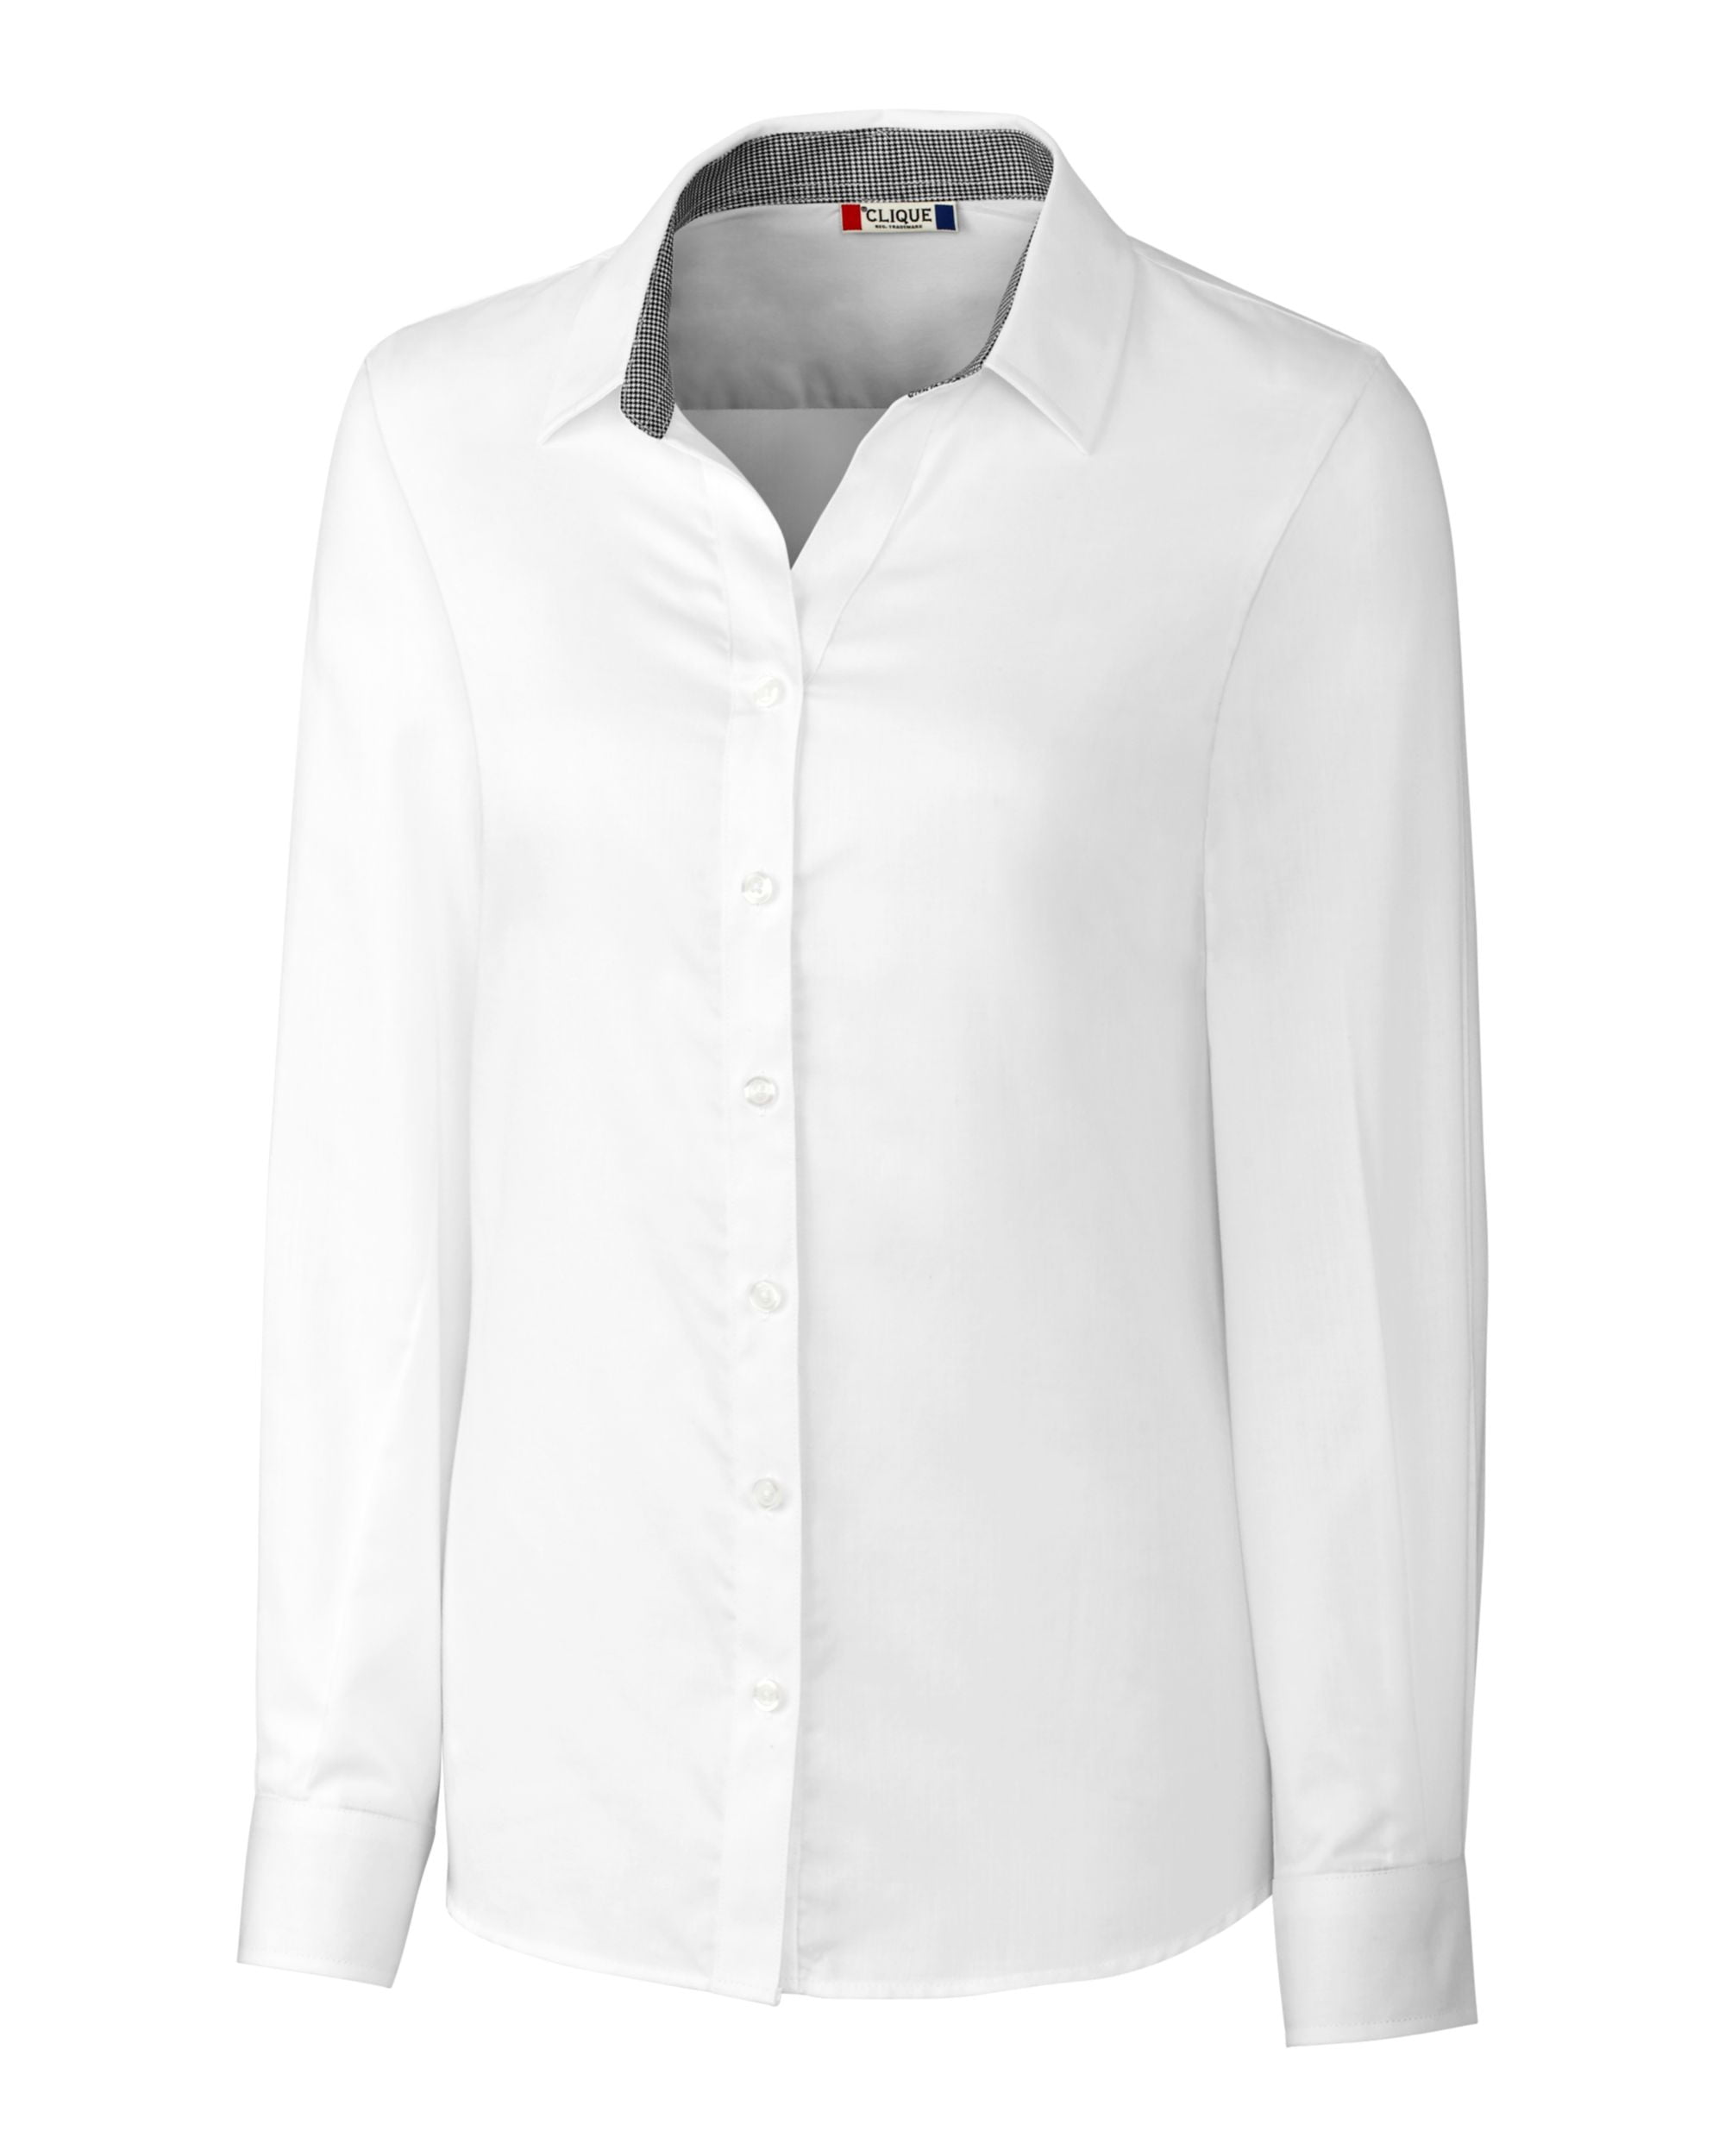 womens white dress shirt walmart